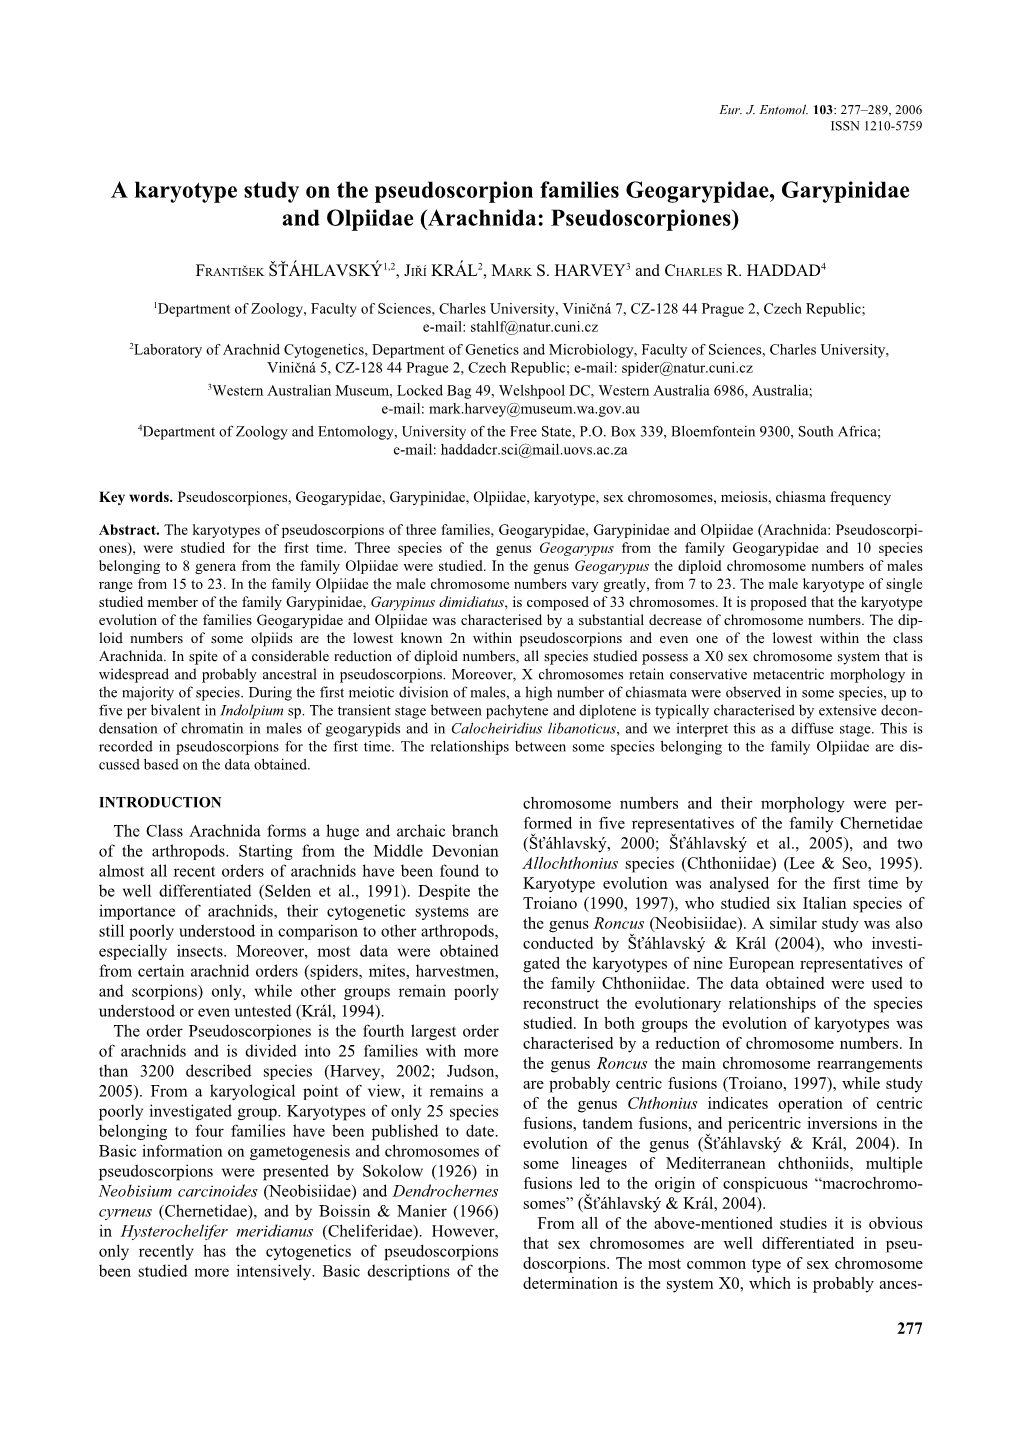 A Karyotype Study on the Pseudoscorpion Families Geogarypidae, Garypinidae and Olpiidae (Arachnida: Pseudoscorpiones)